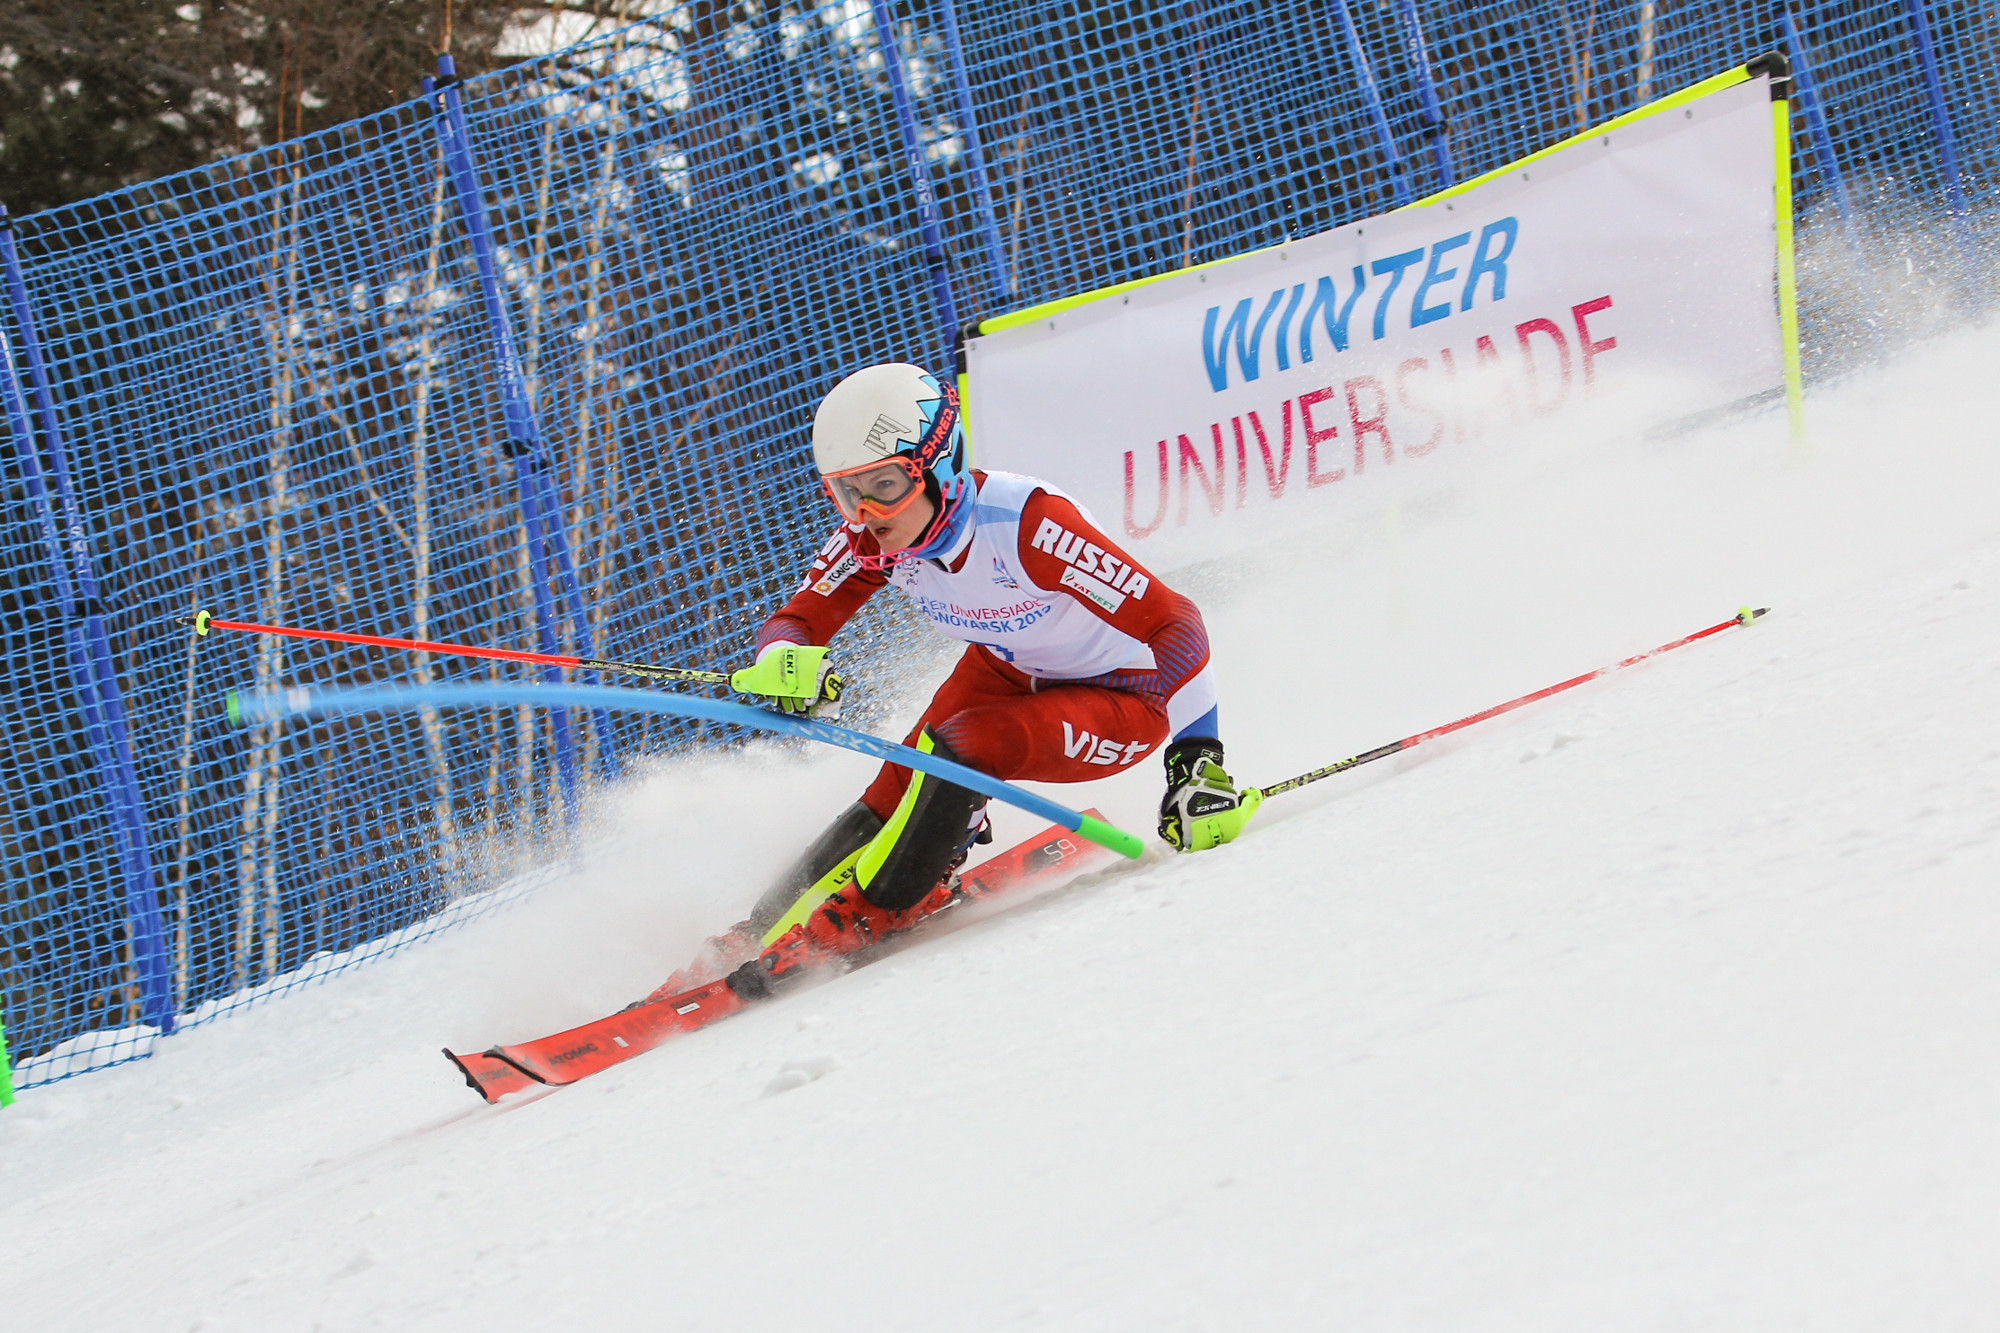 The women's Alpine skiing slalom event also got underway at the Sopka Cluster ©Krasnoyarsk 2019